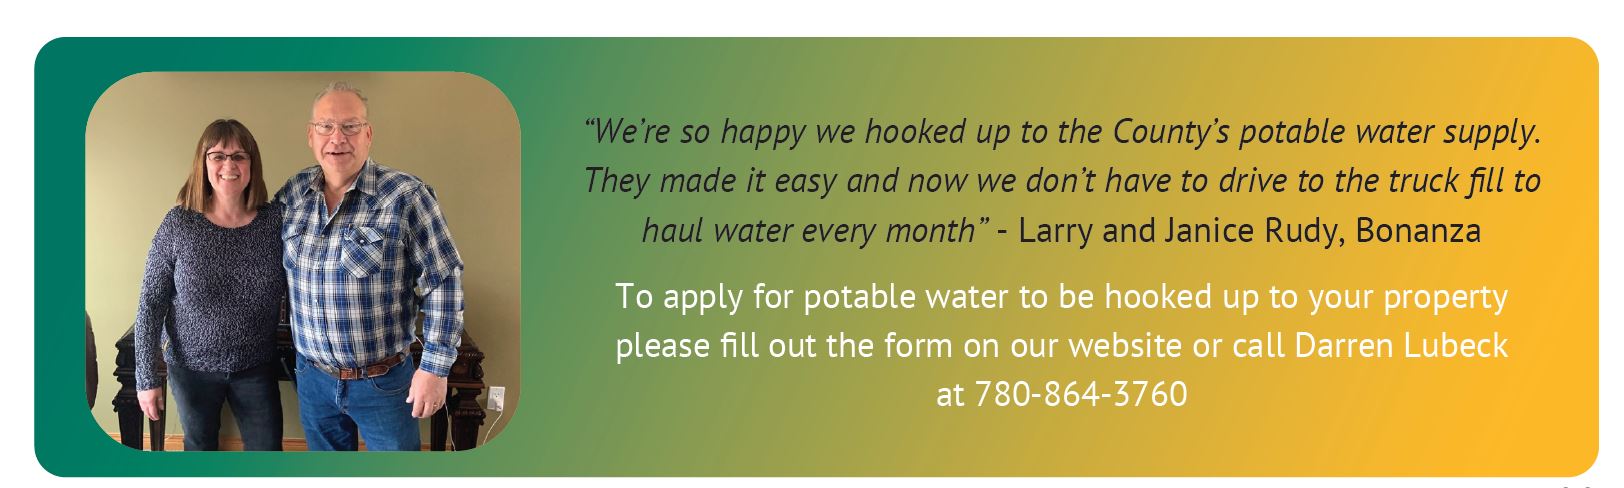 Image of Potable Water Testimonial Ad